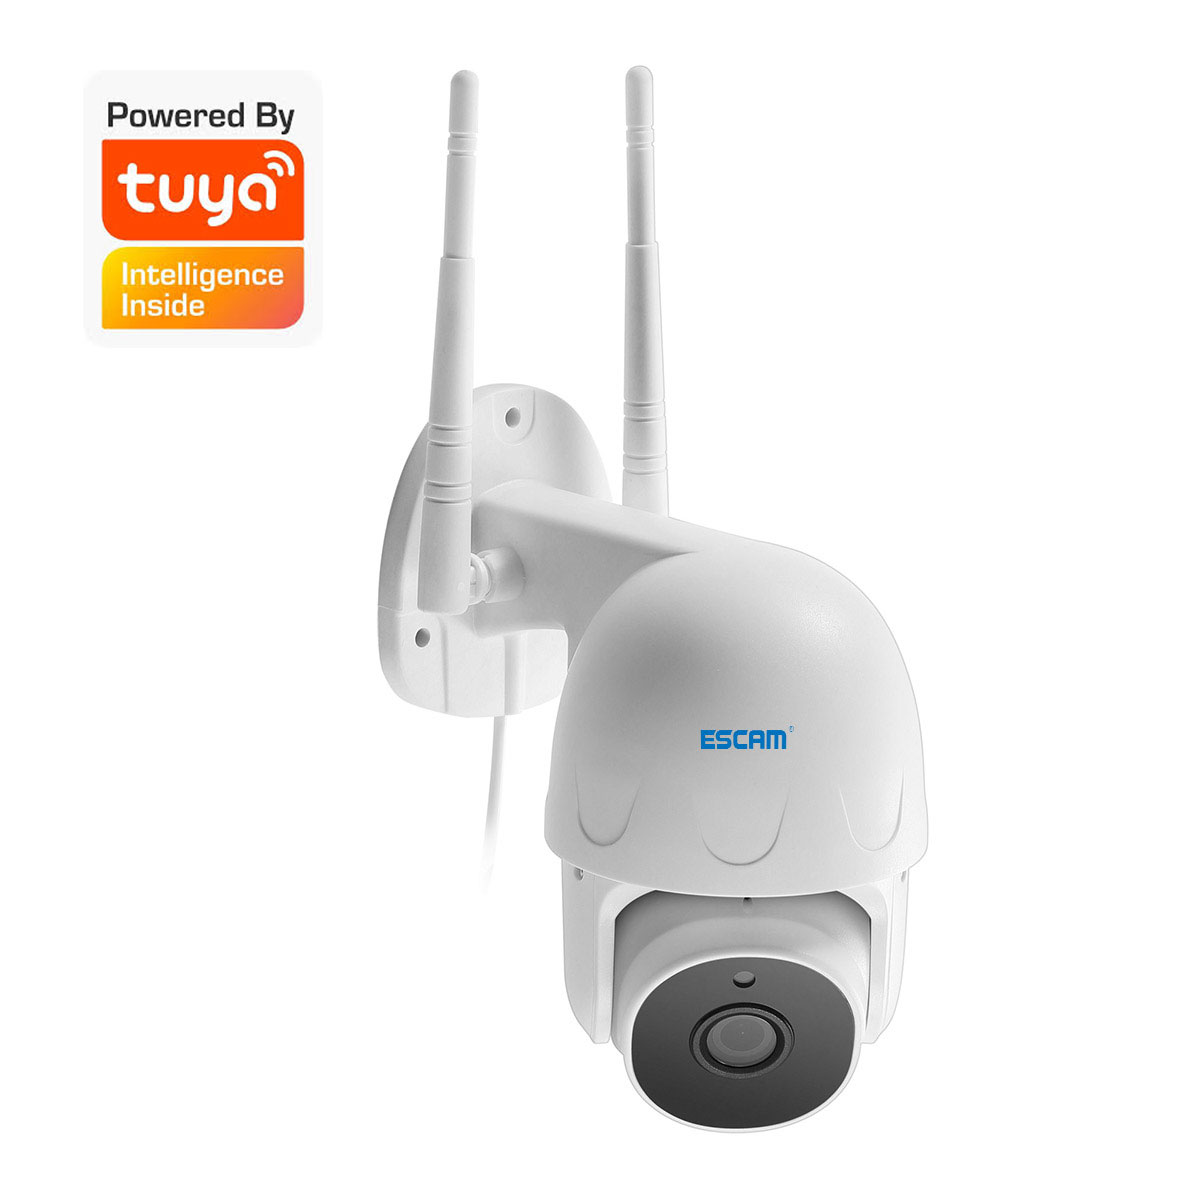 ESCAM-TY100-Tuya-H265-WiFi-IP-Camera-1080P-PanTilt-Outdoor--Two-Way-Audio-Voice-Alarm-Wifi-Camera-Wa-1823034-11